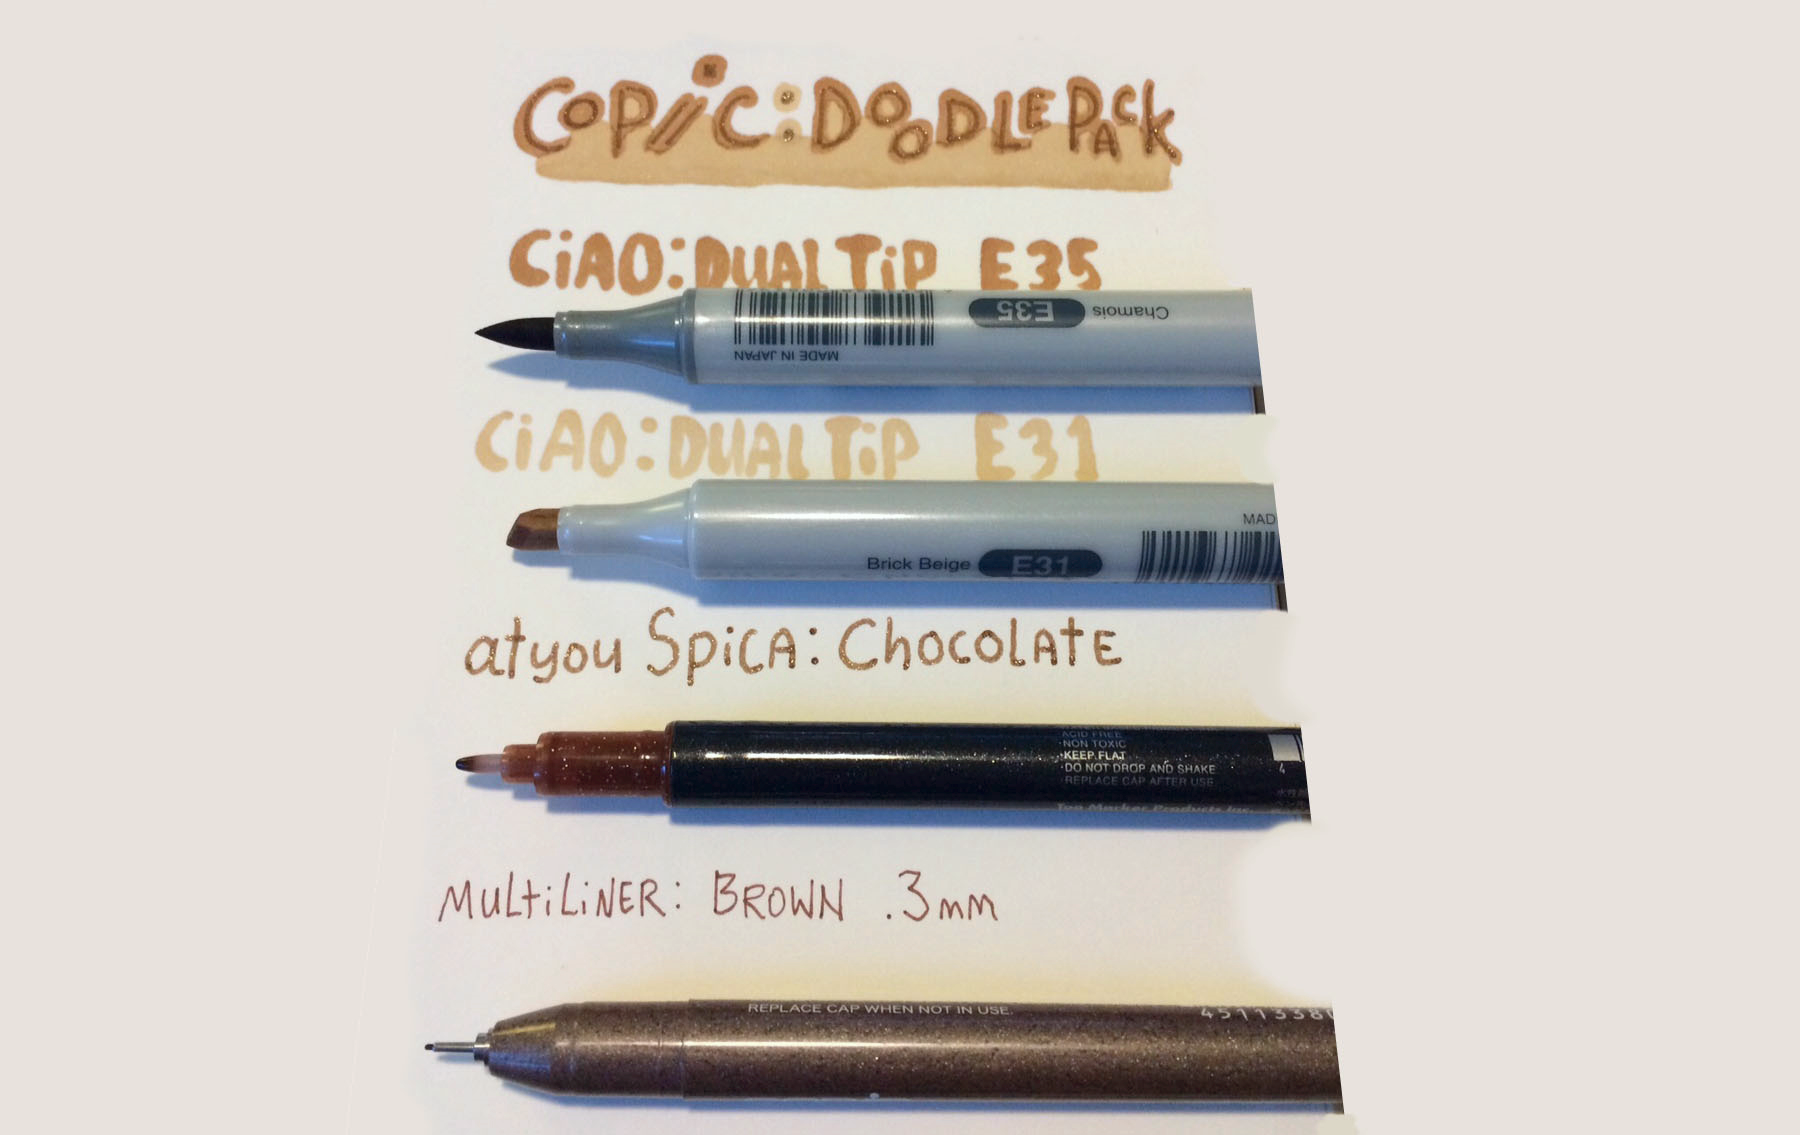 Tombow Dual Brush Pen Set of 10 - Retro – Crush